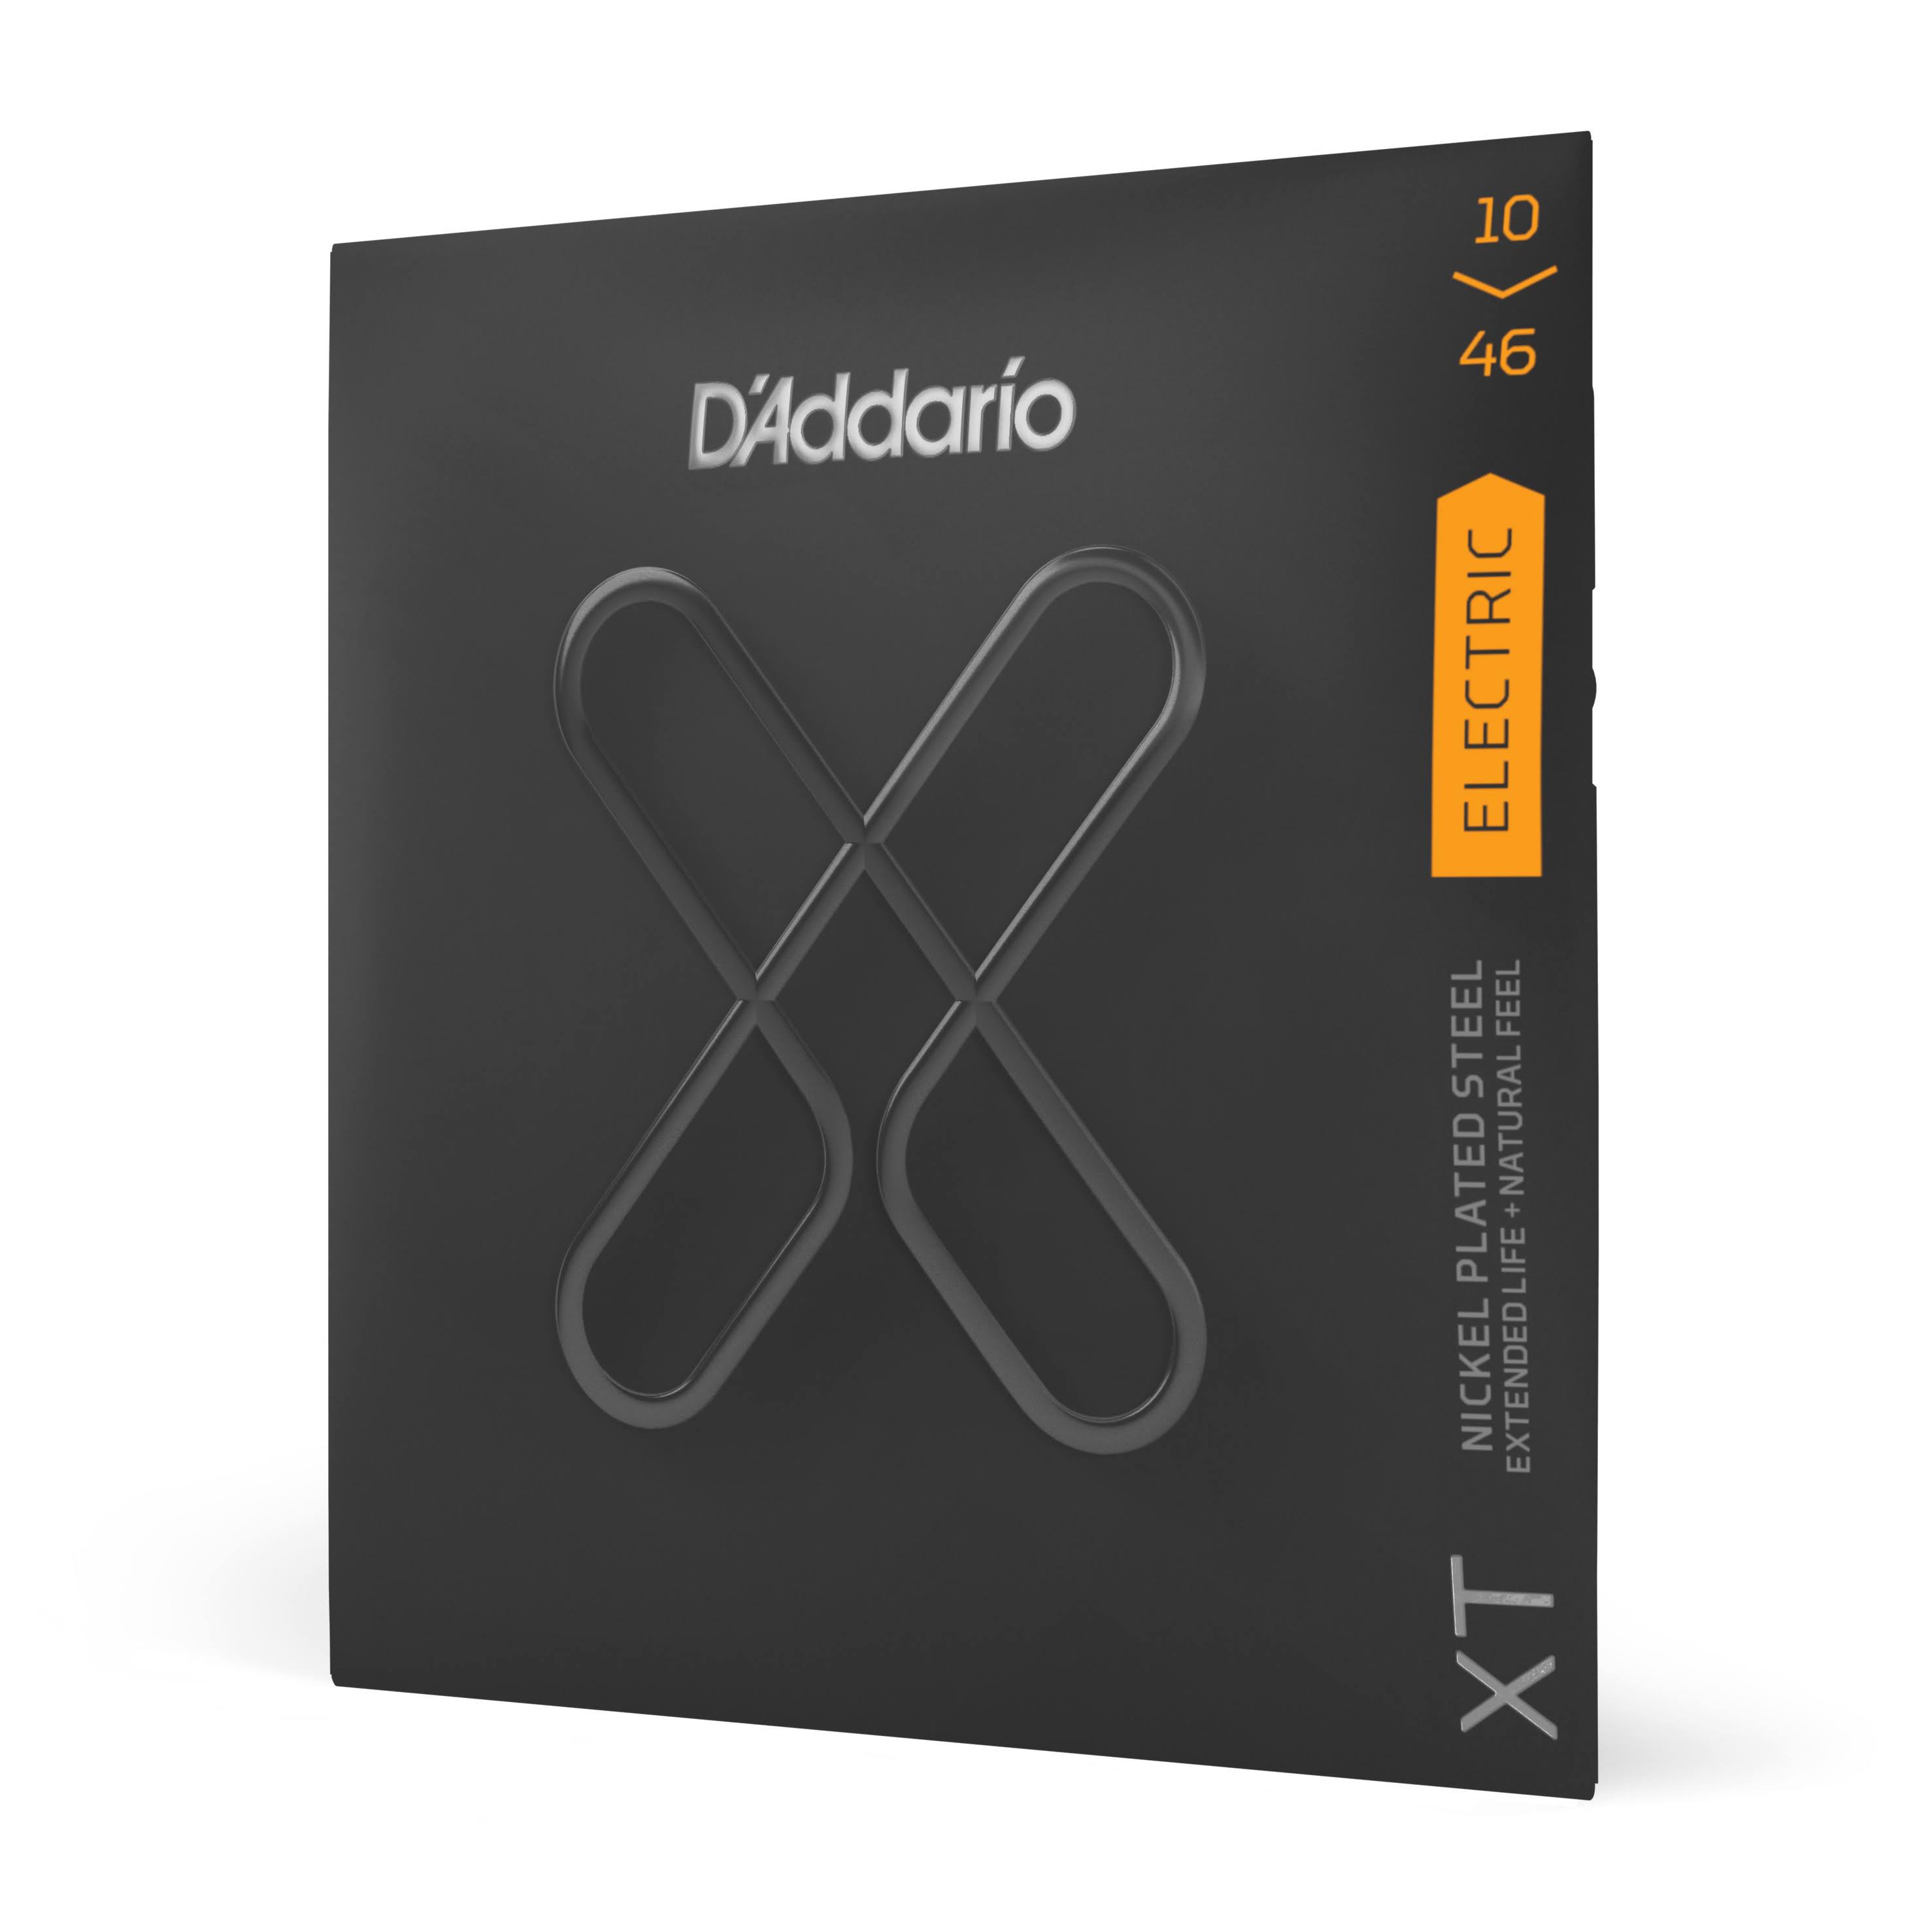 D'Addario XT Series Electric Guitar Strings - Nickel, Size 10-46